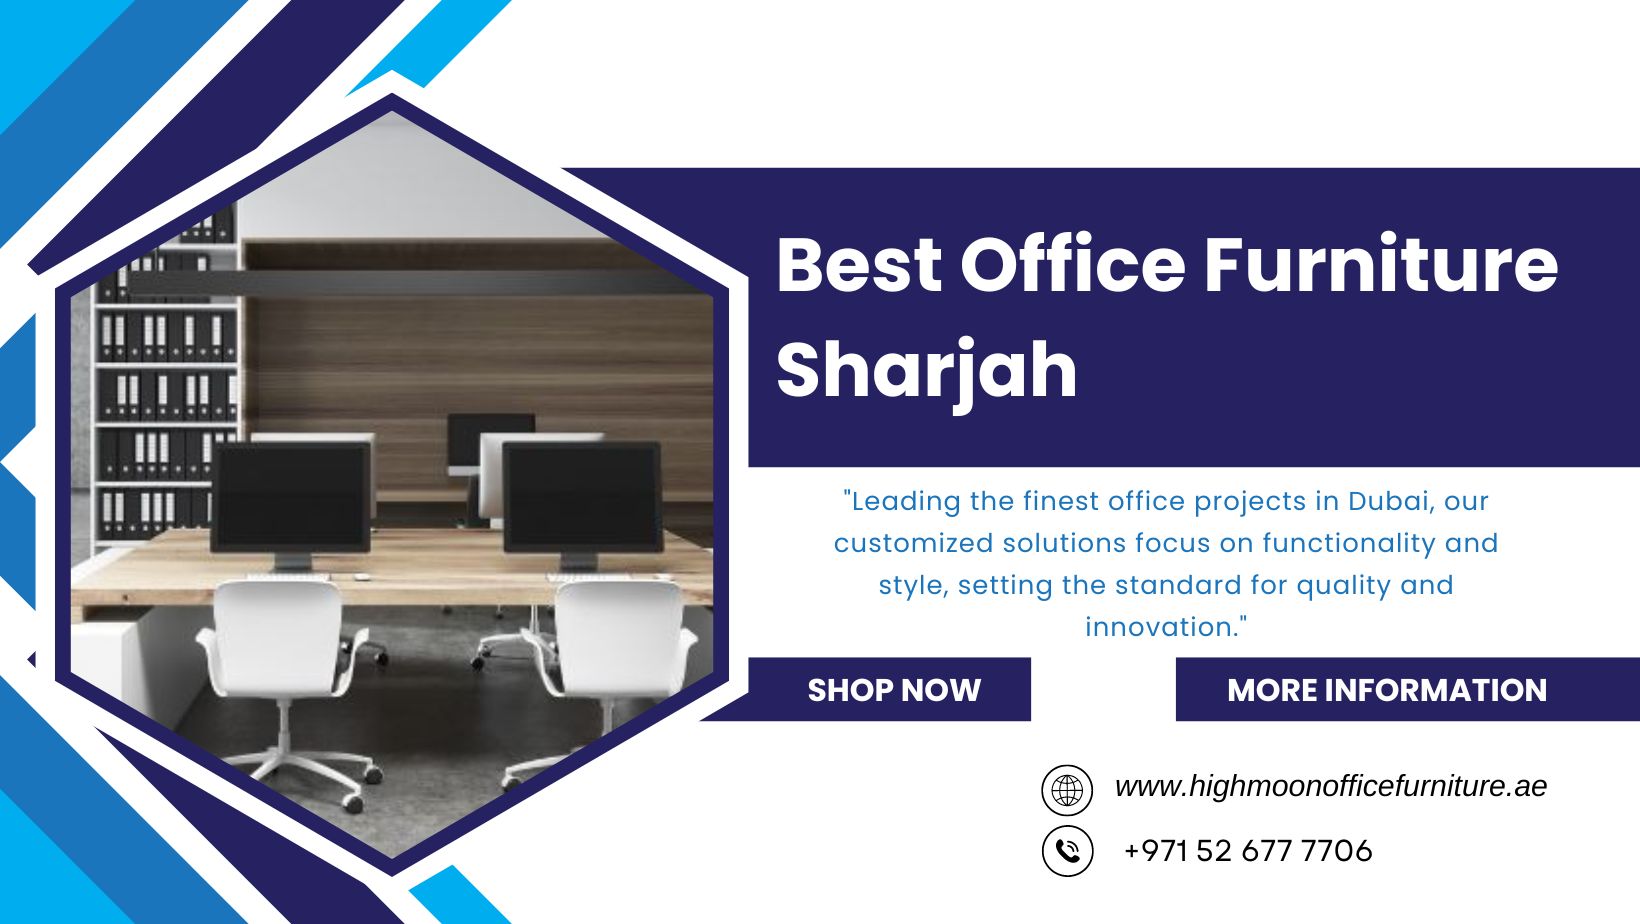 Best Office Furniture Sharjah